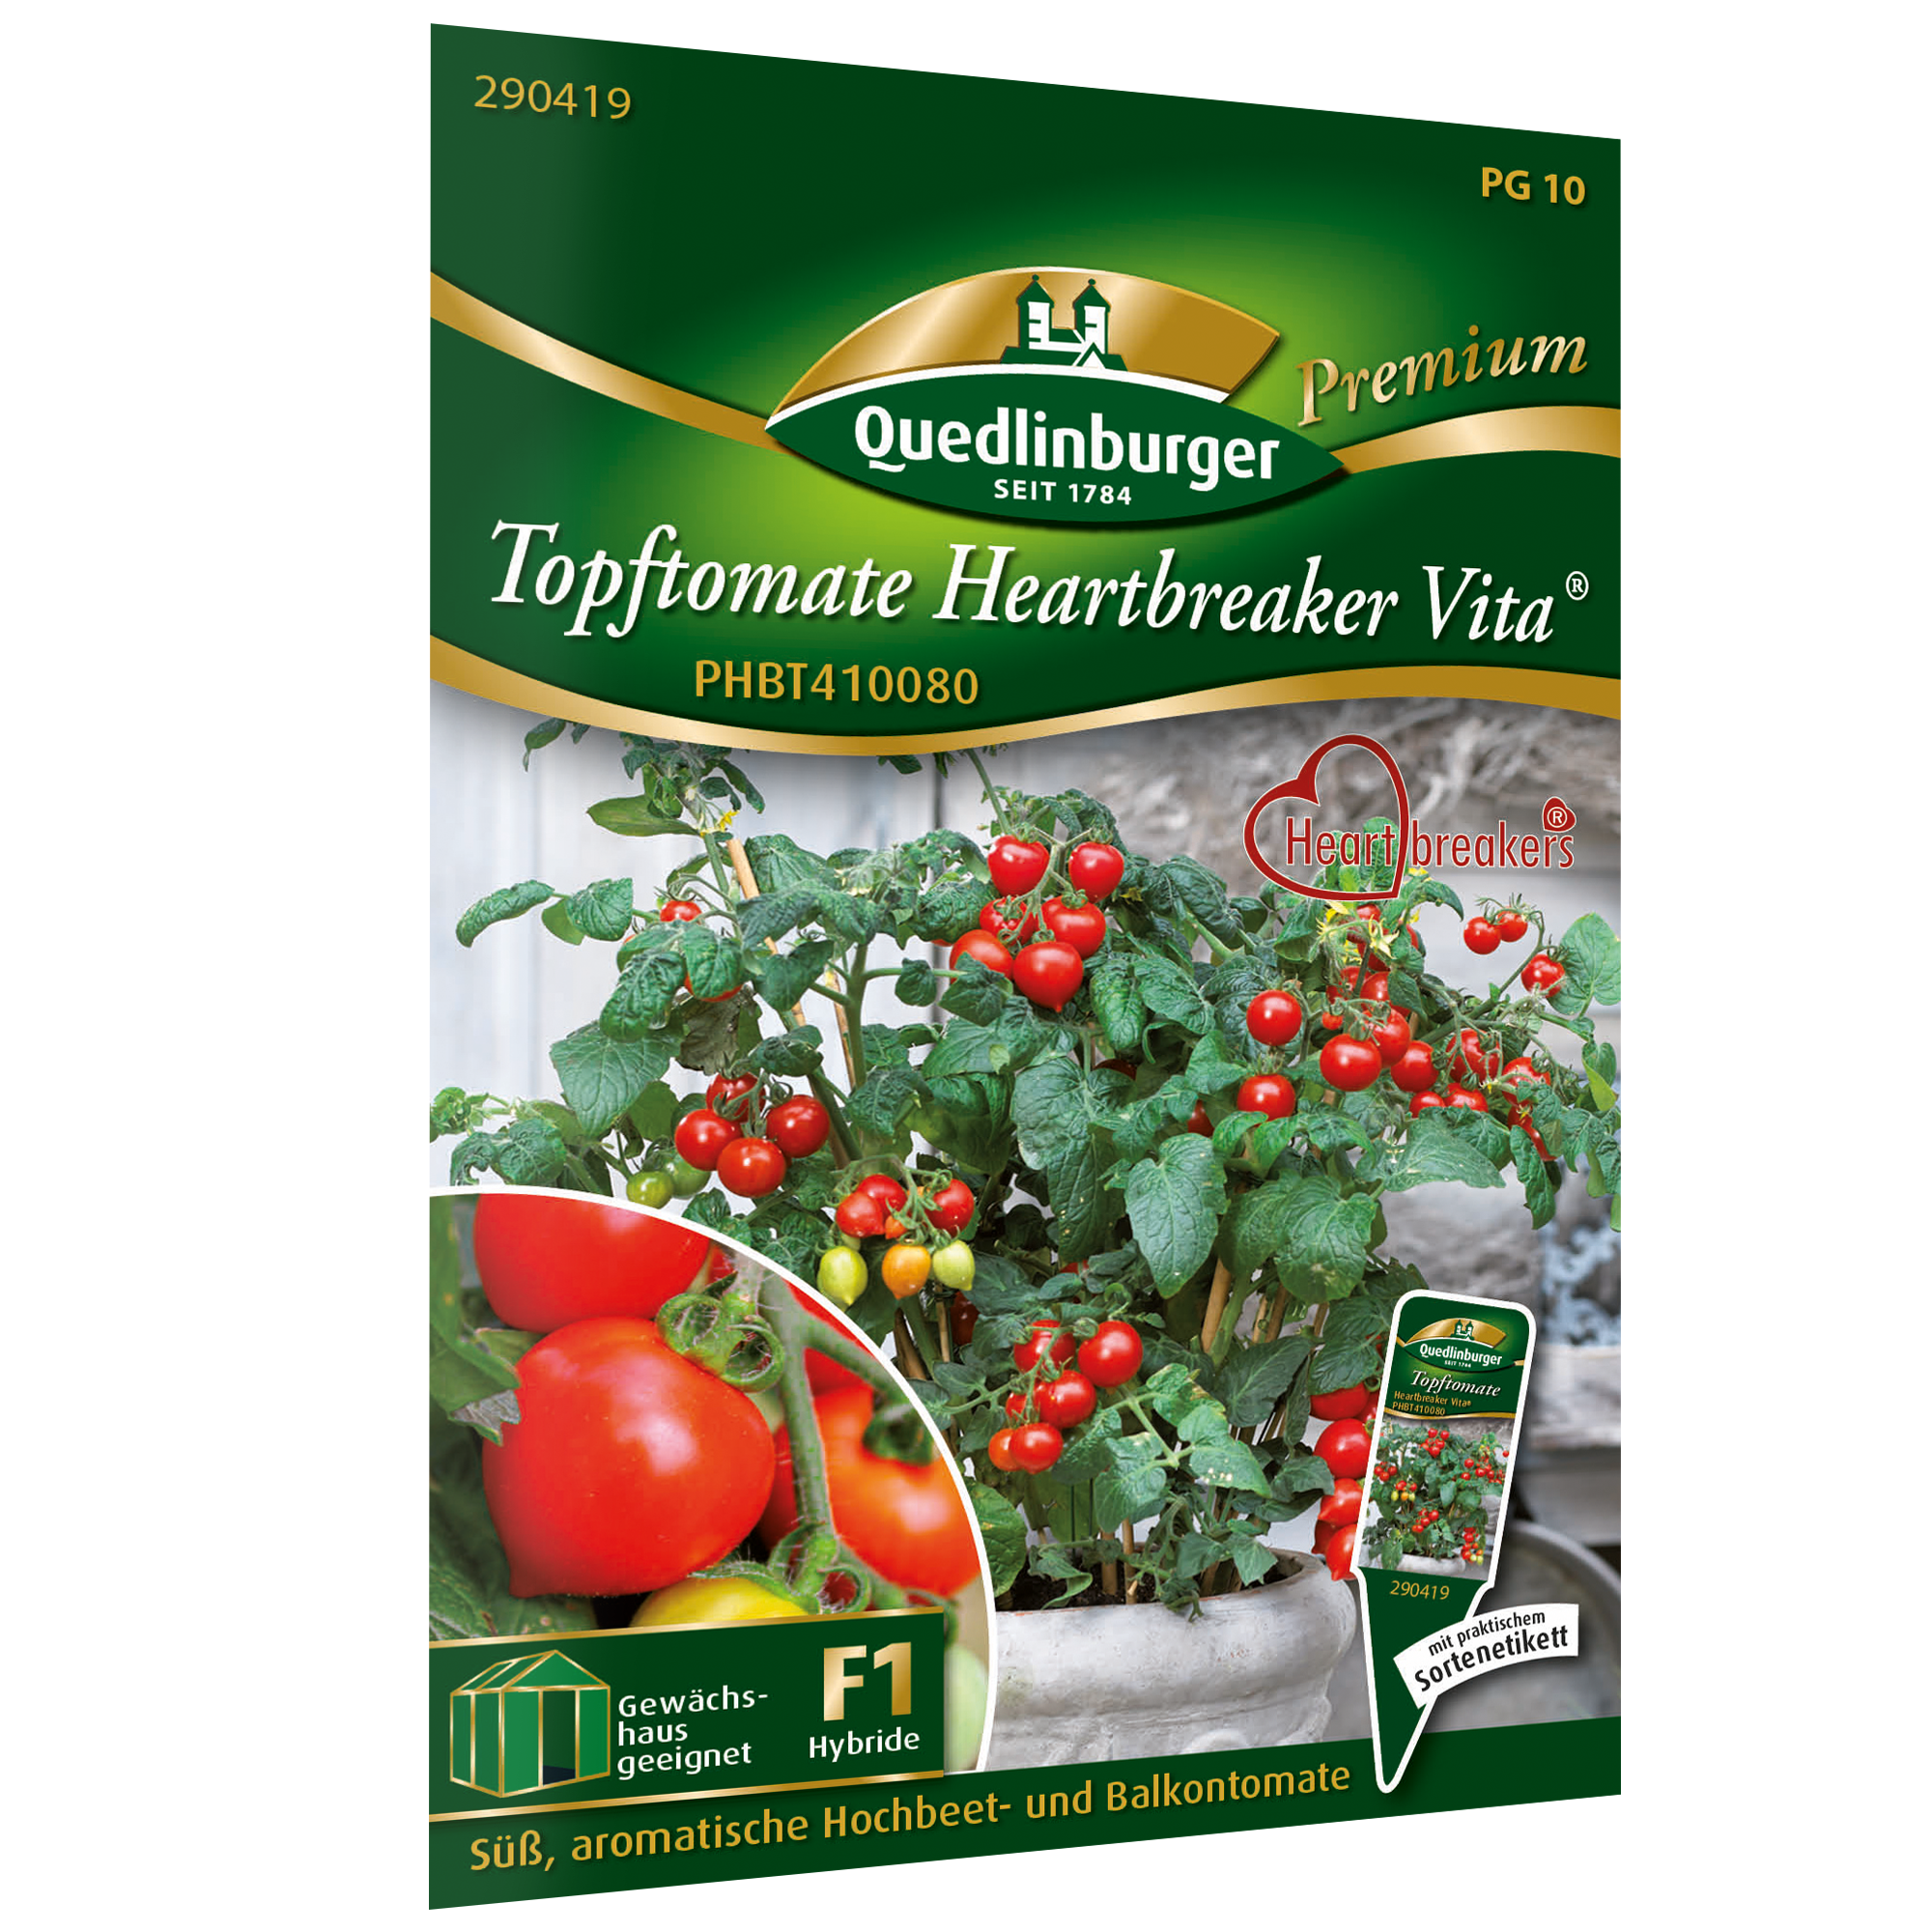 Topftomate 'Heartbreaker Vita' + product picture